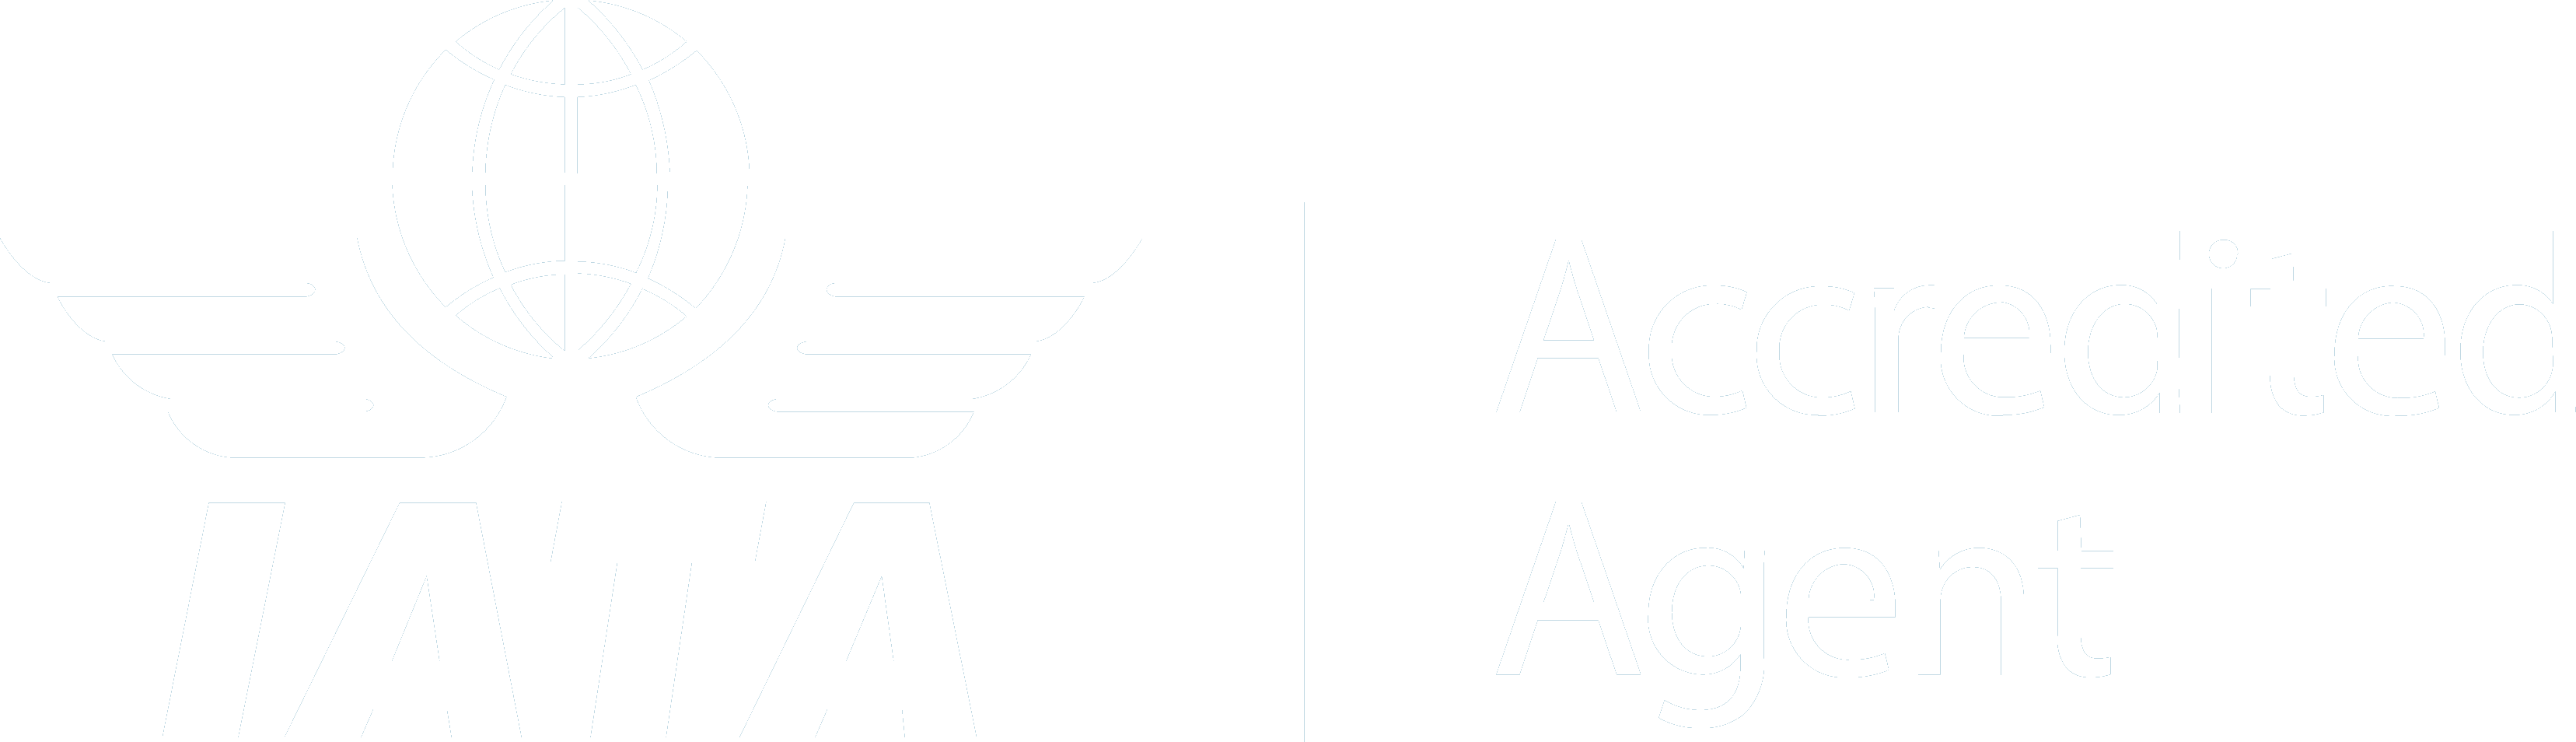 IATA Customer Portal by International Air Transport Association